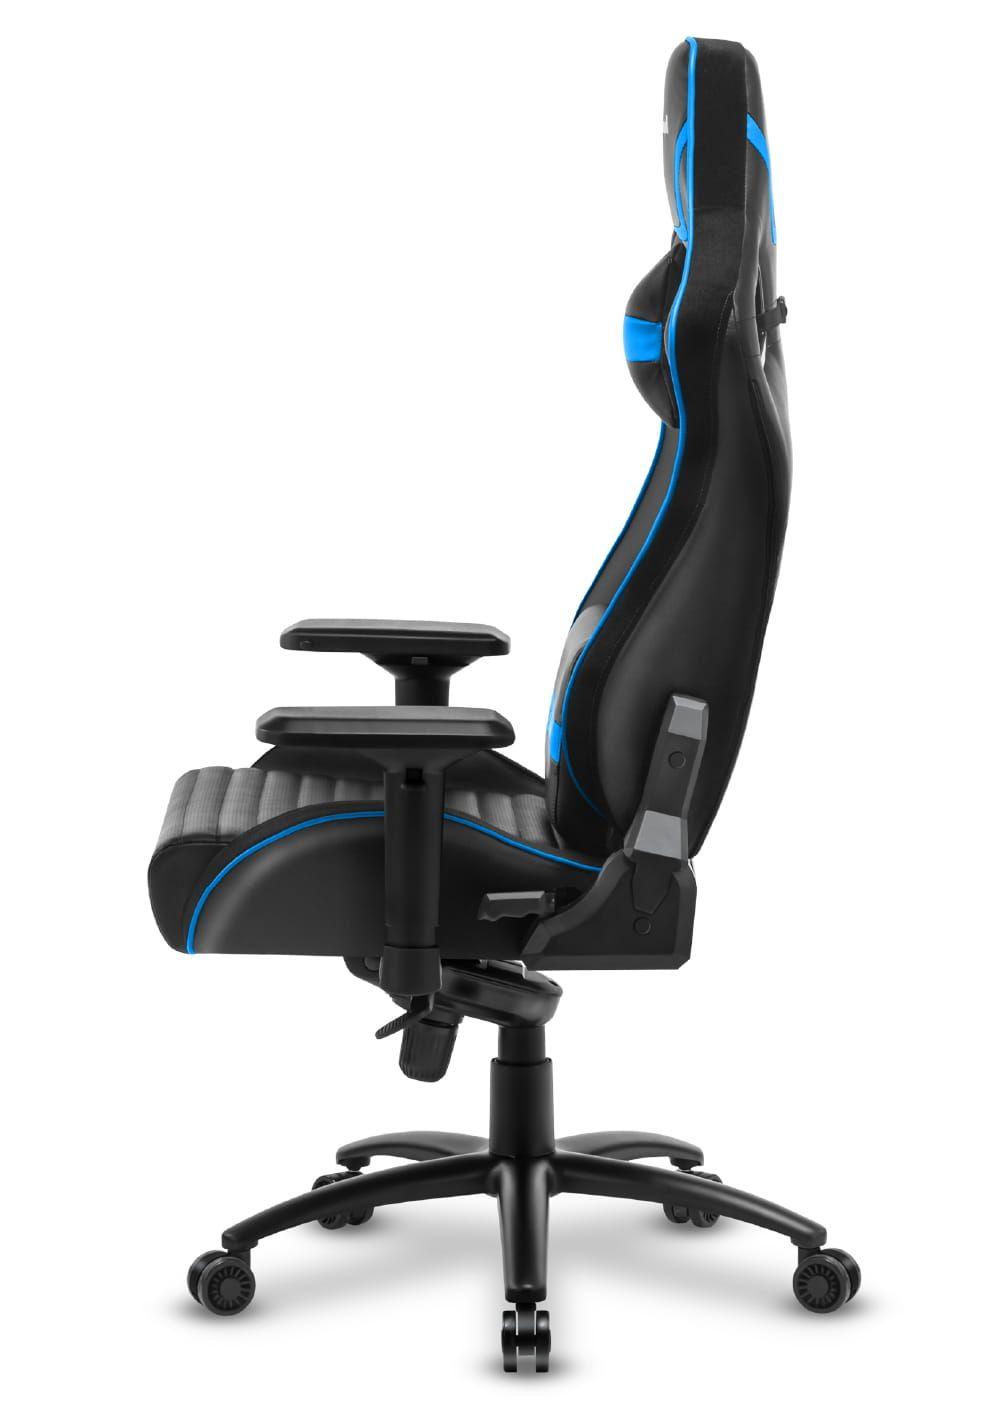 Huzaro Force 8.2 Universal gaming chair Black, Blue